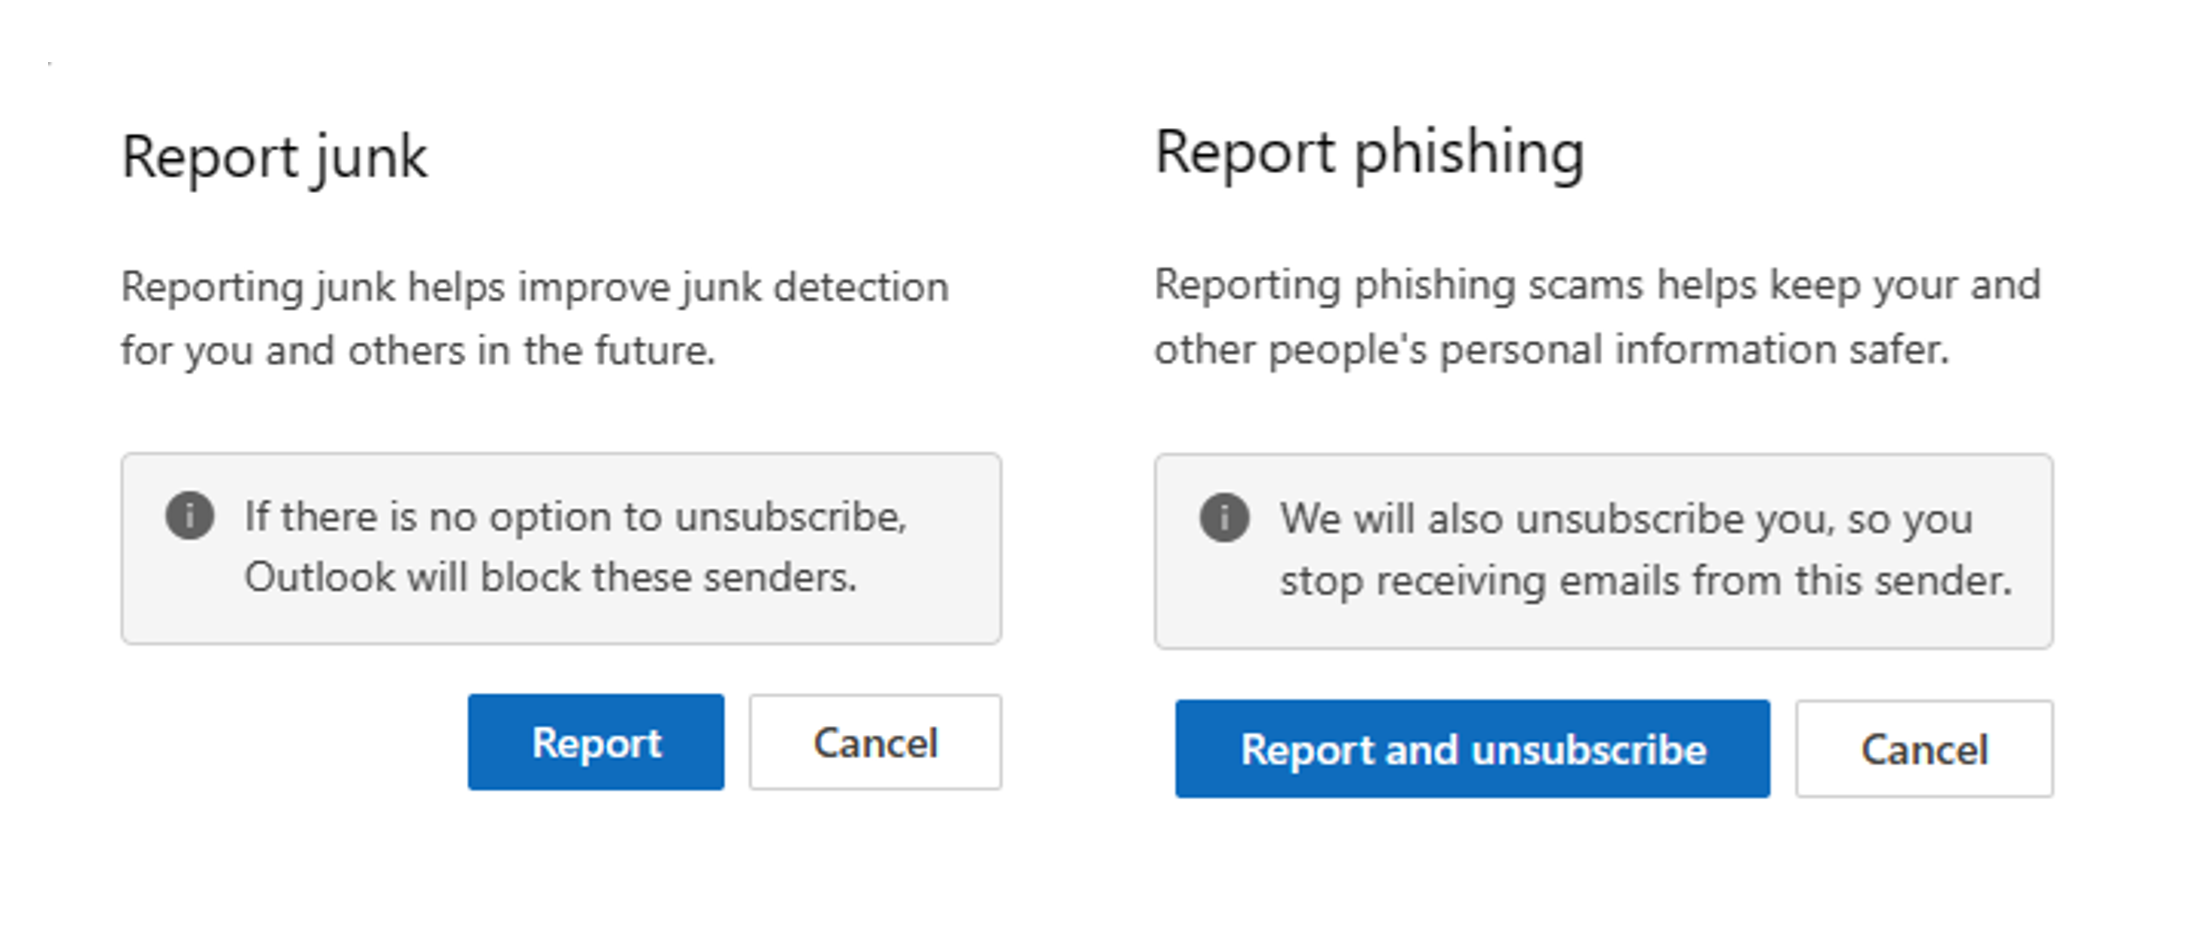 Report junk and Report phishing alerts